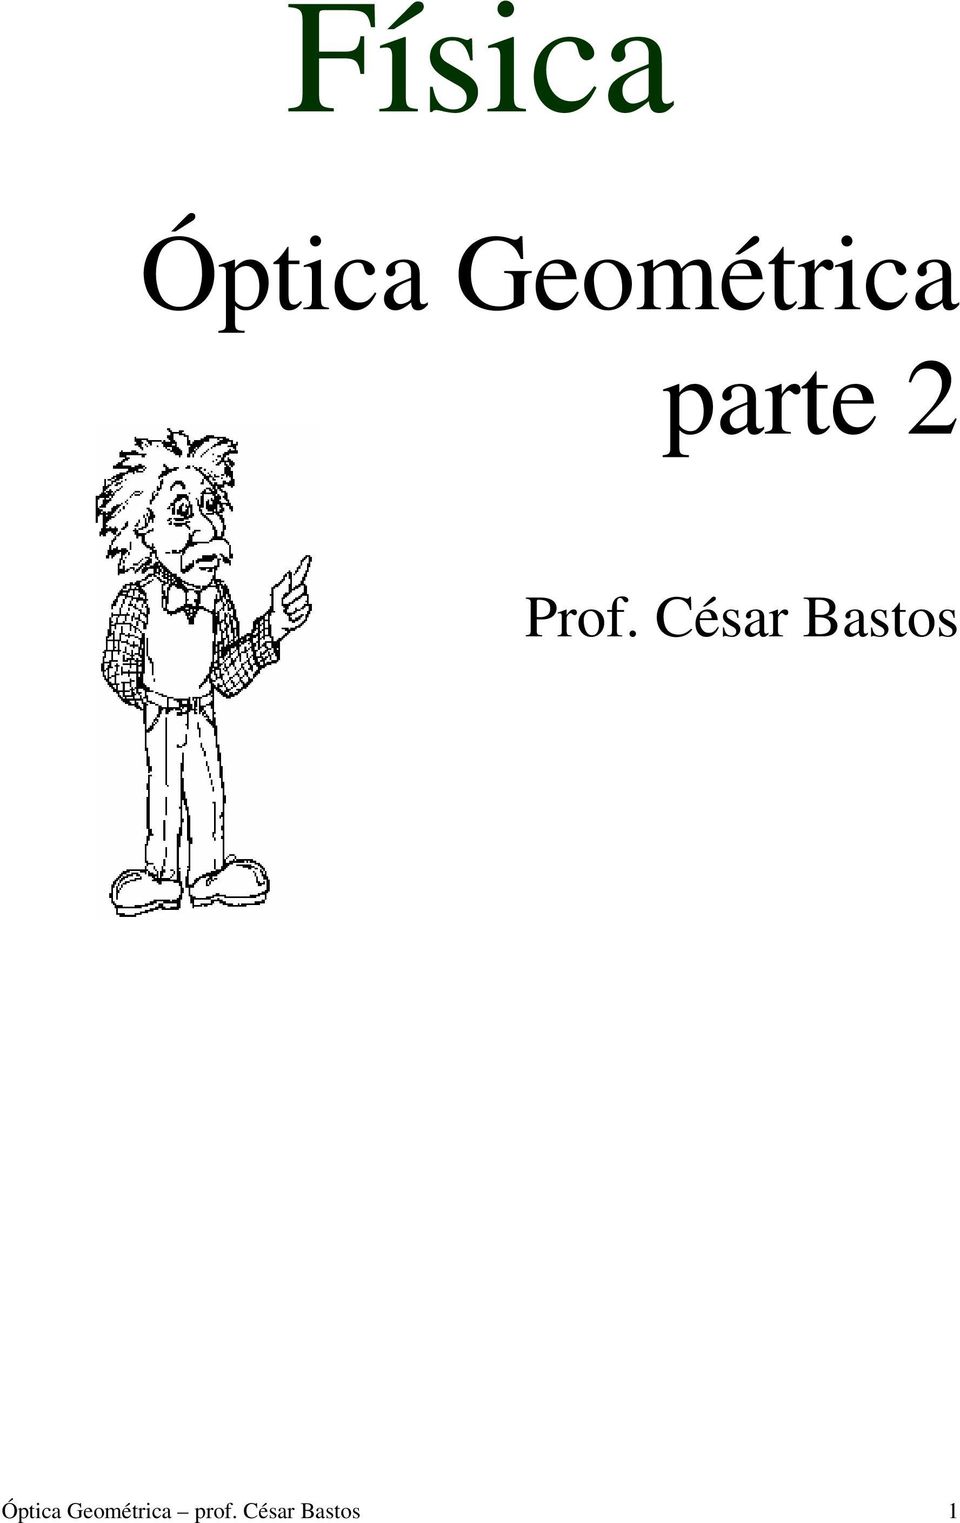 Prof. César Bastos